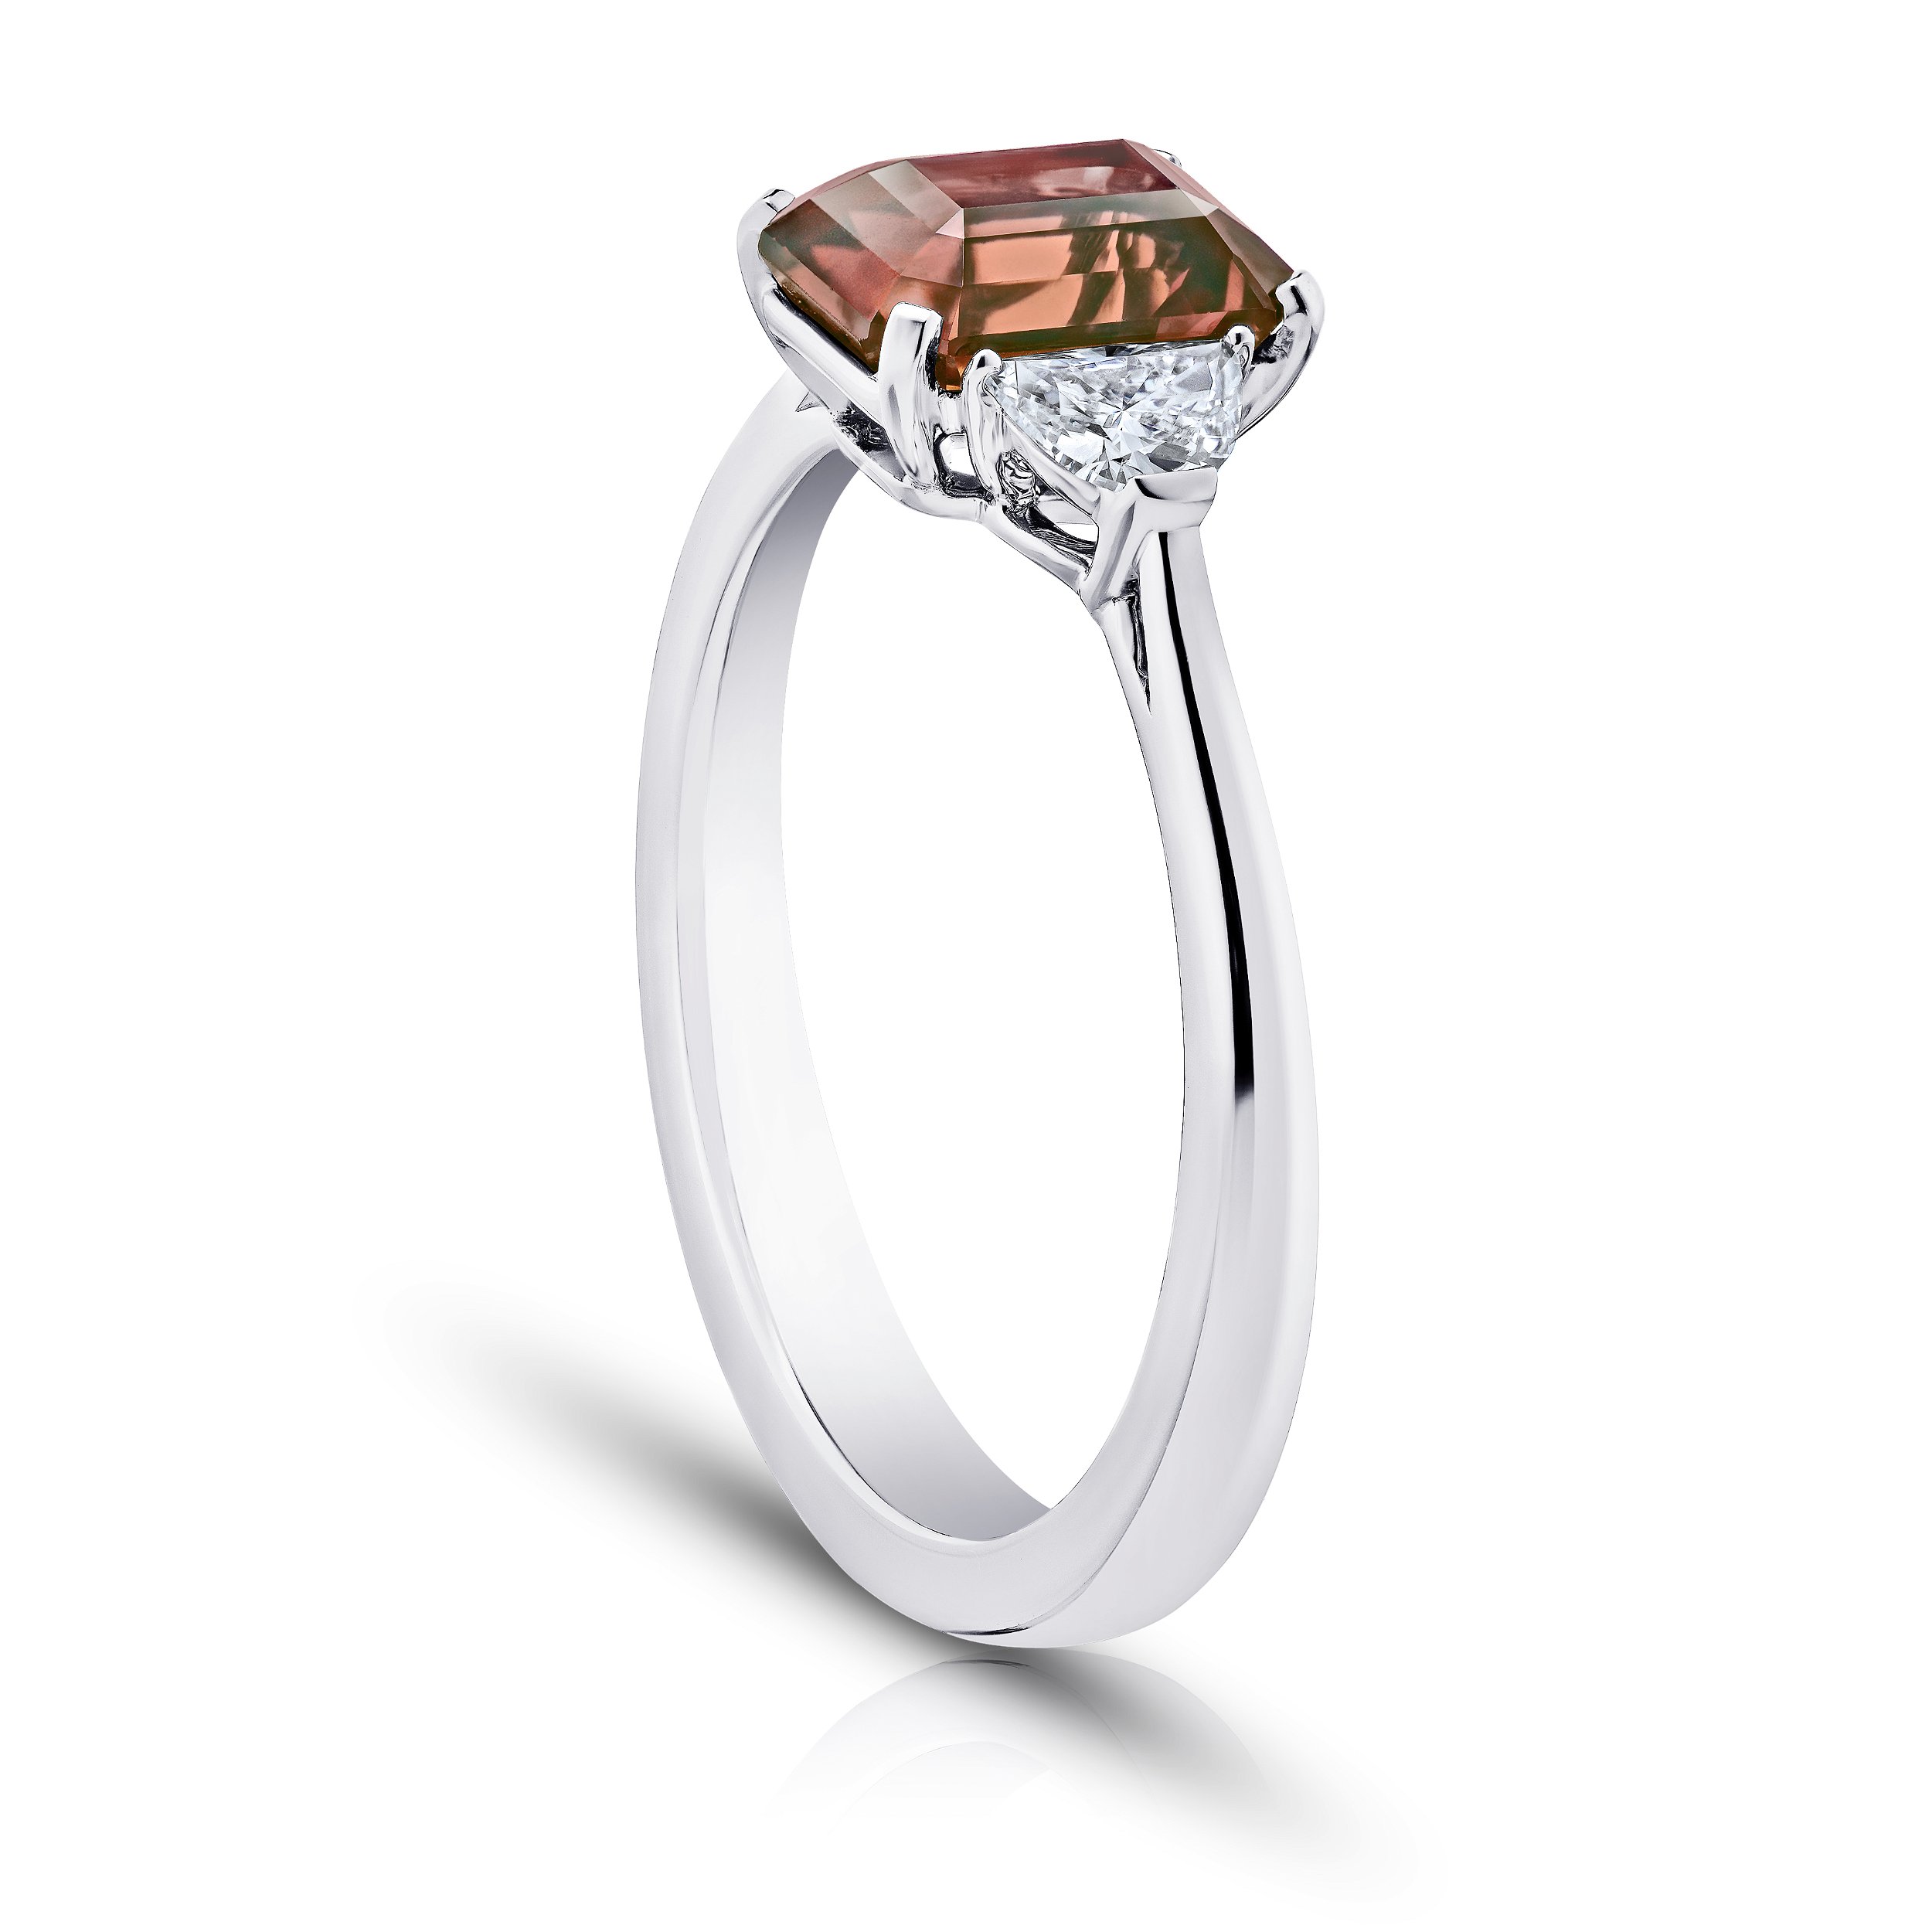 2.08 Carat Emerald Cut Reddish Brown Sapphire and Diamond Ring in Platinum